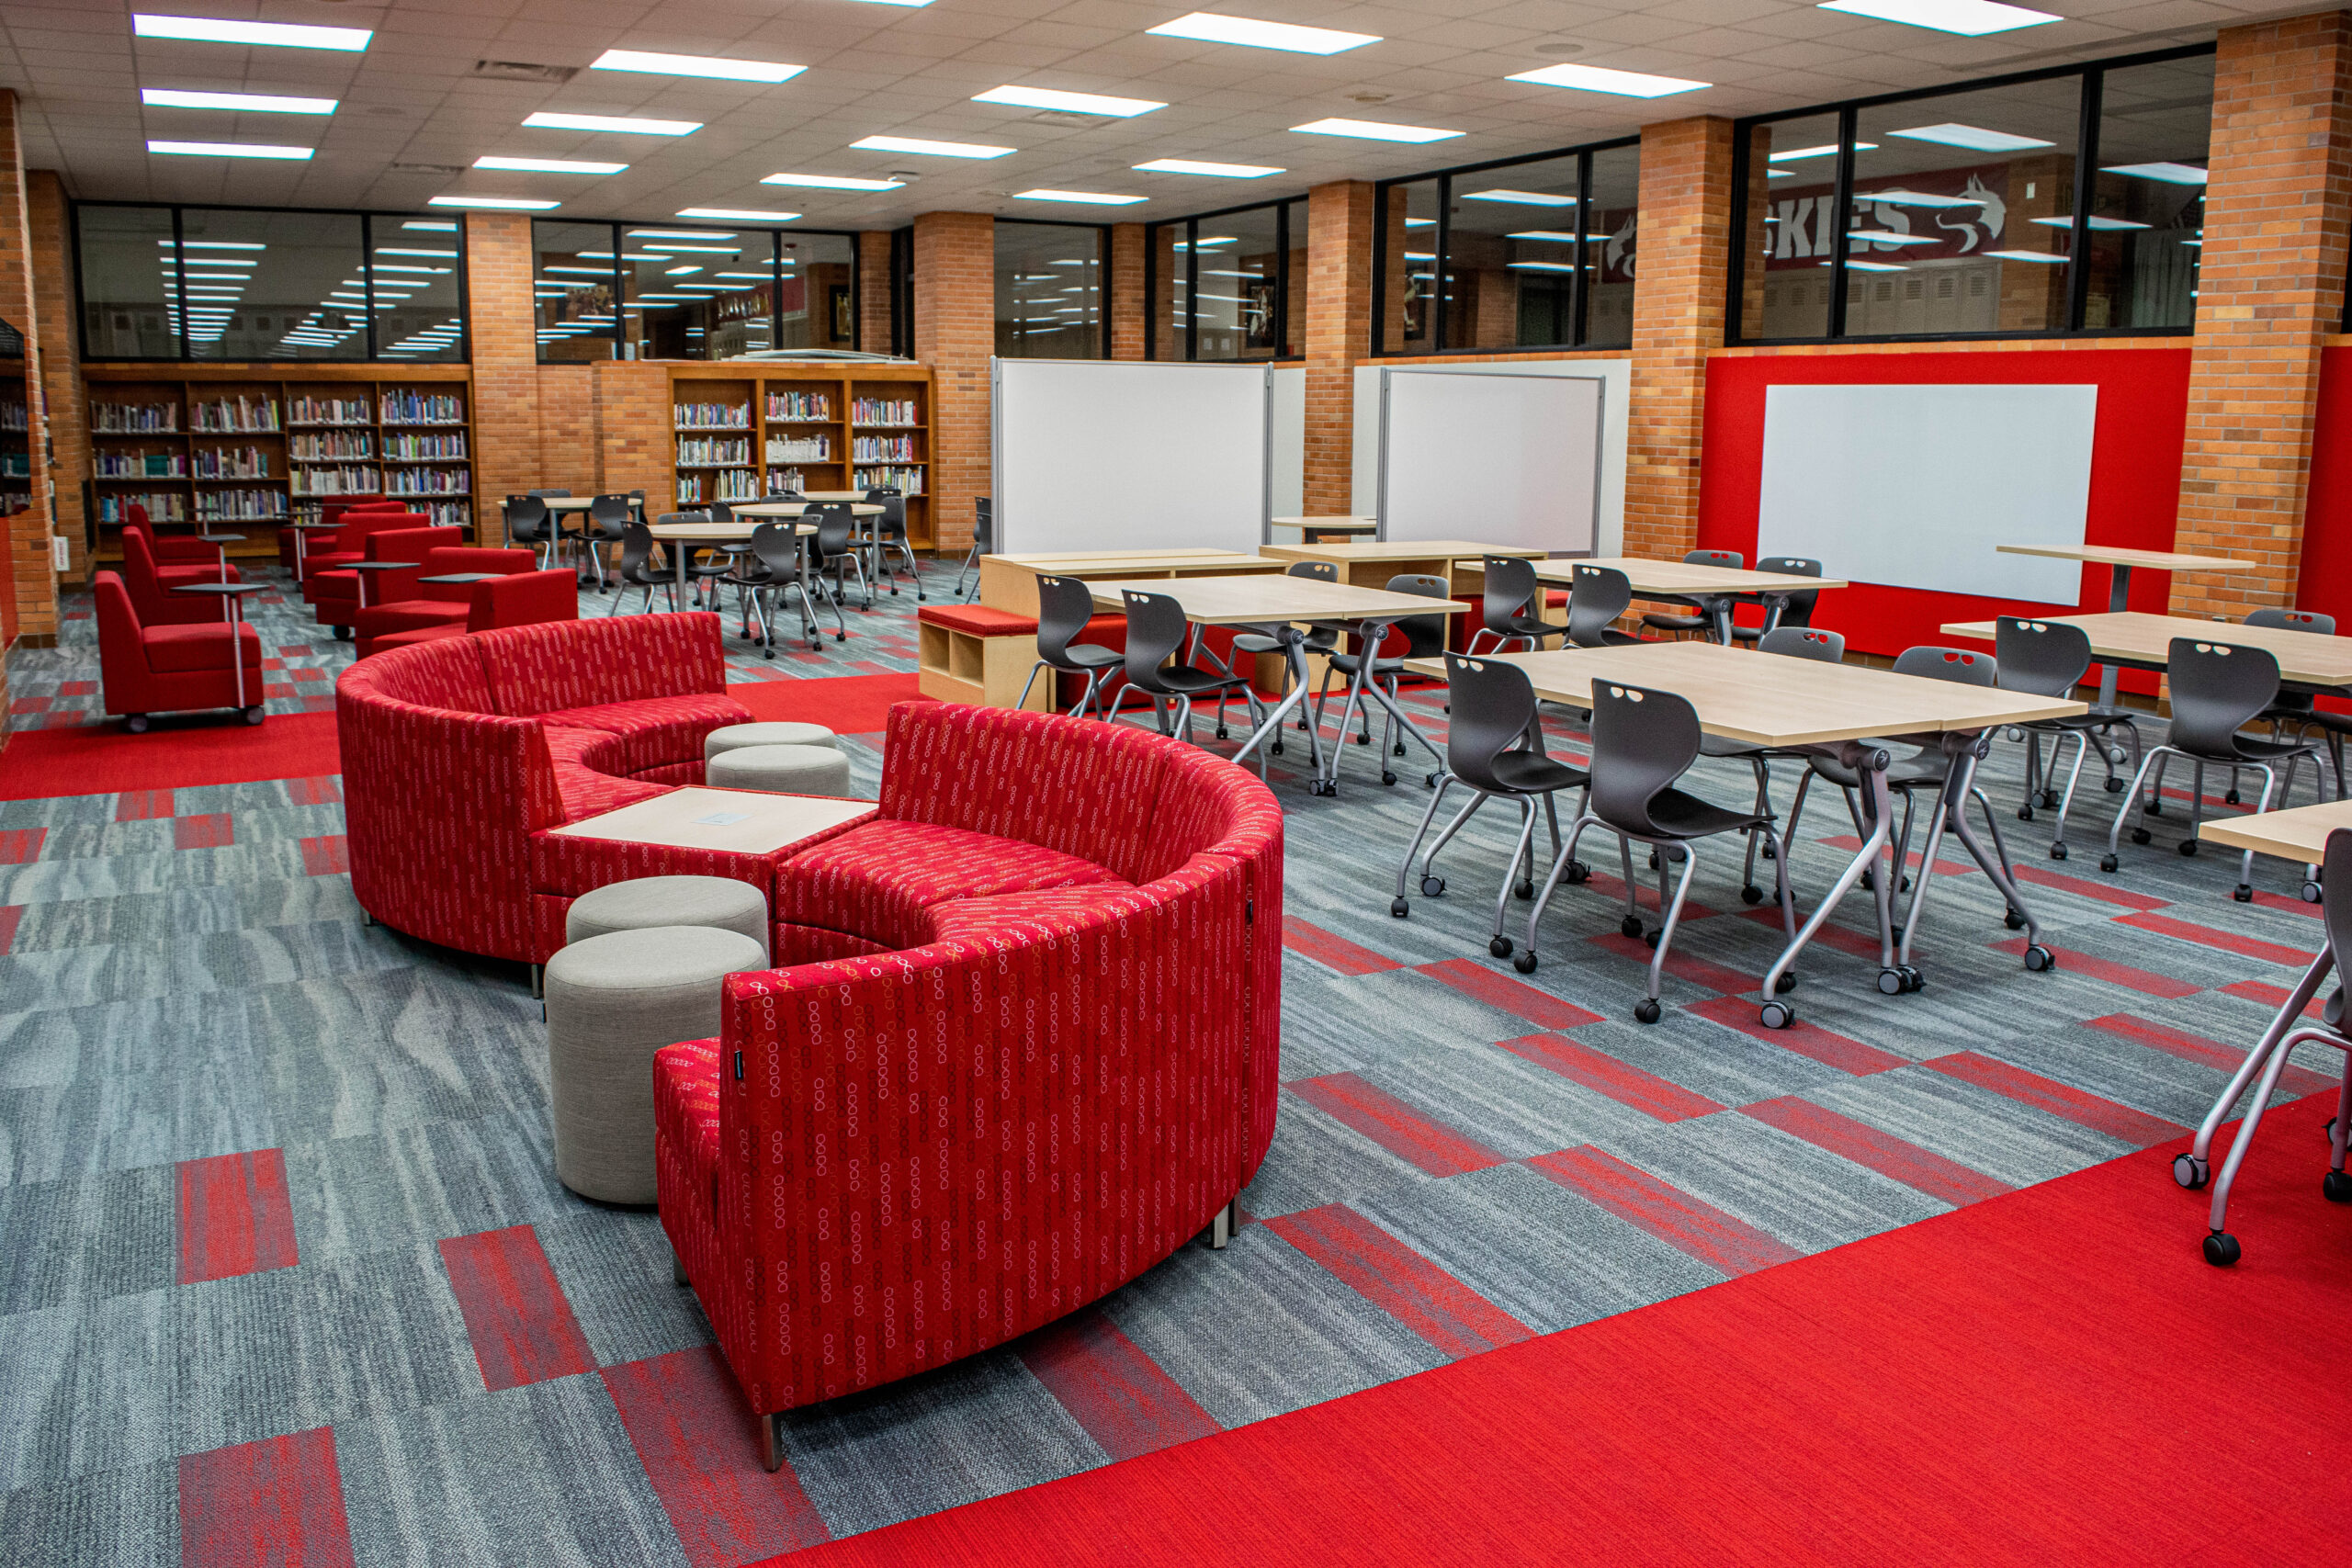 4 Reasons Why School Libraries Still Matter